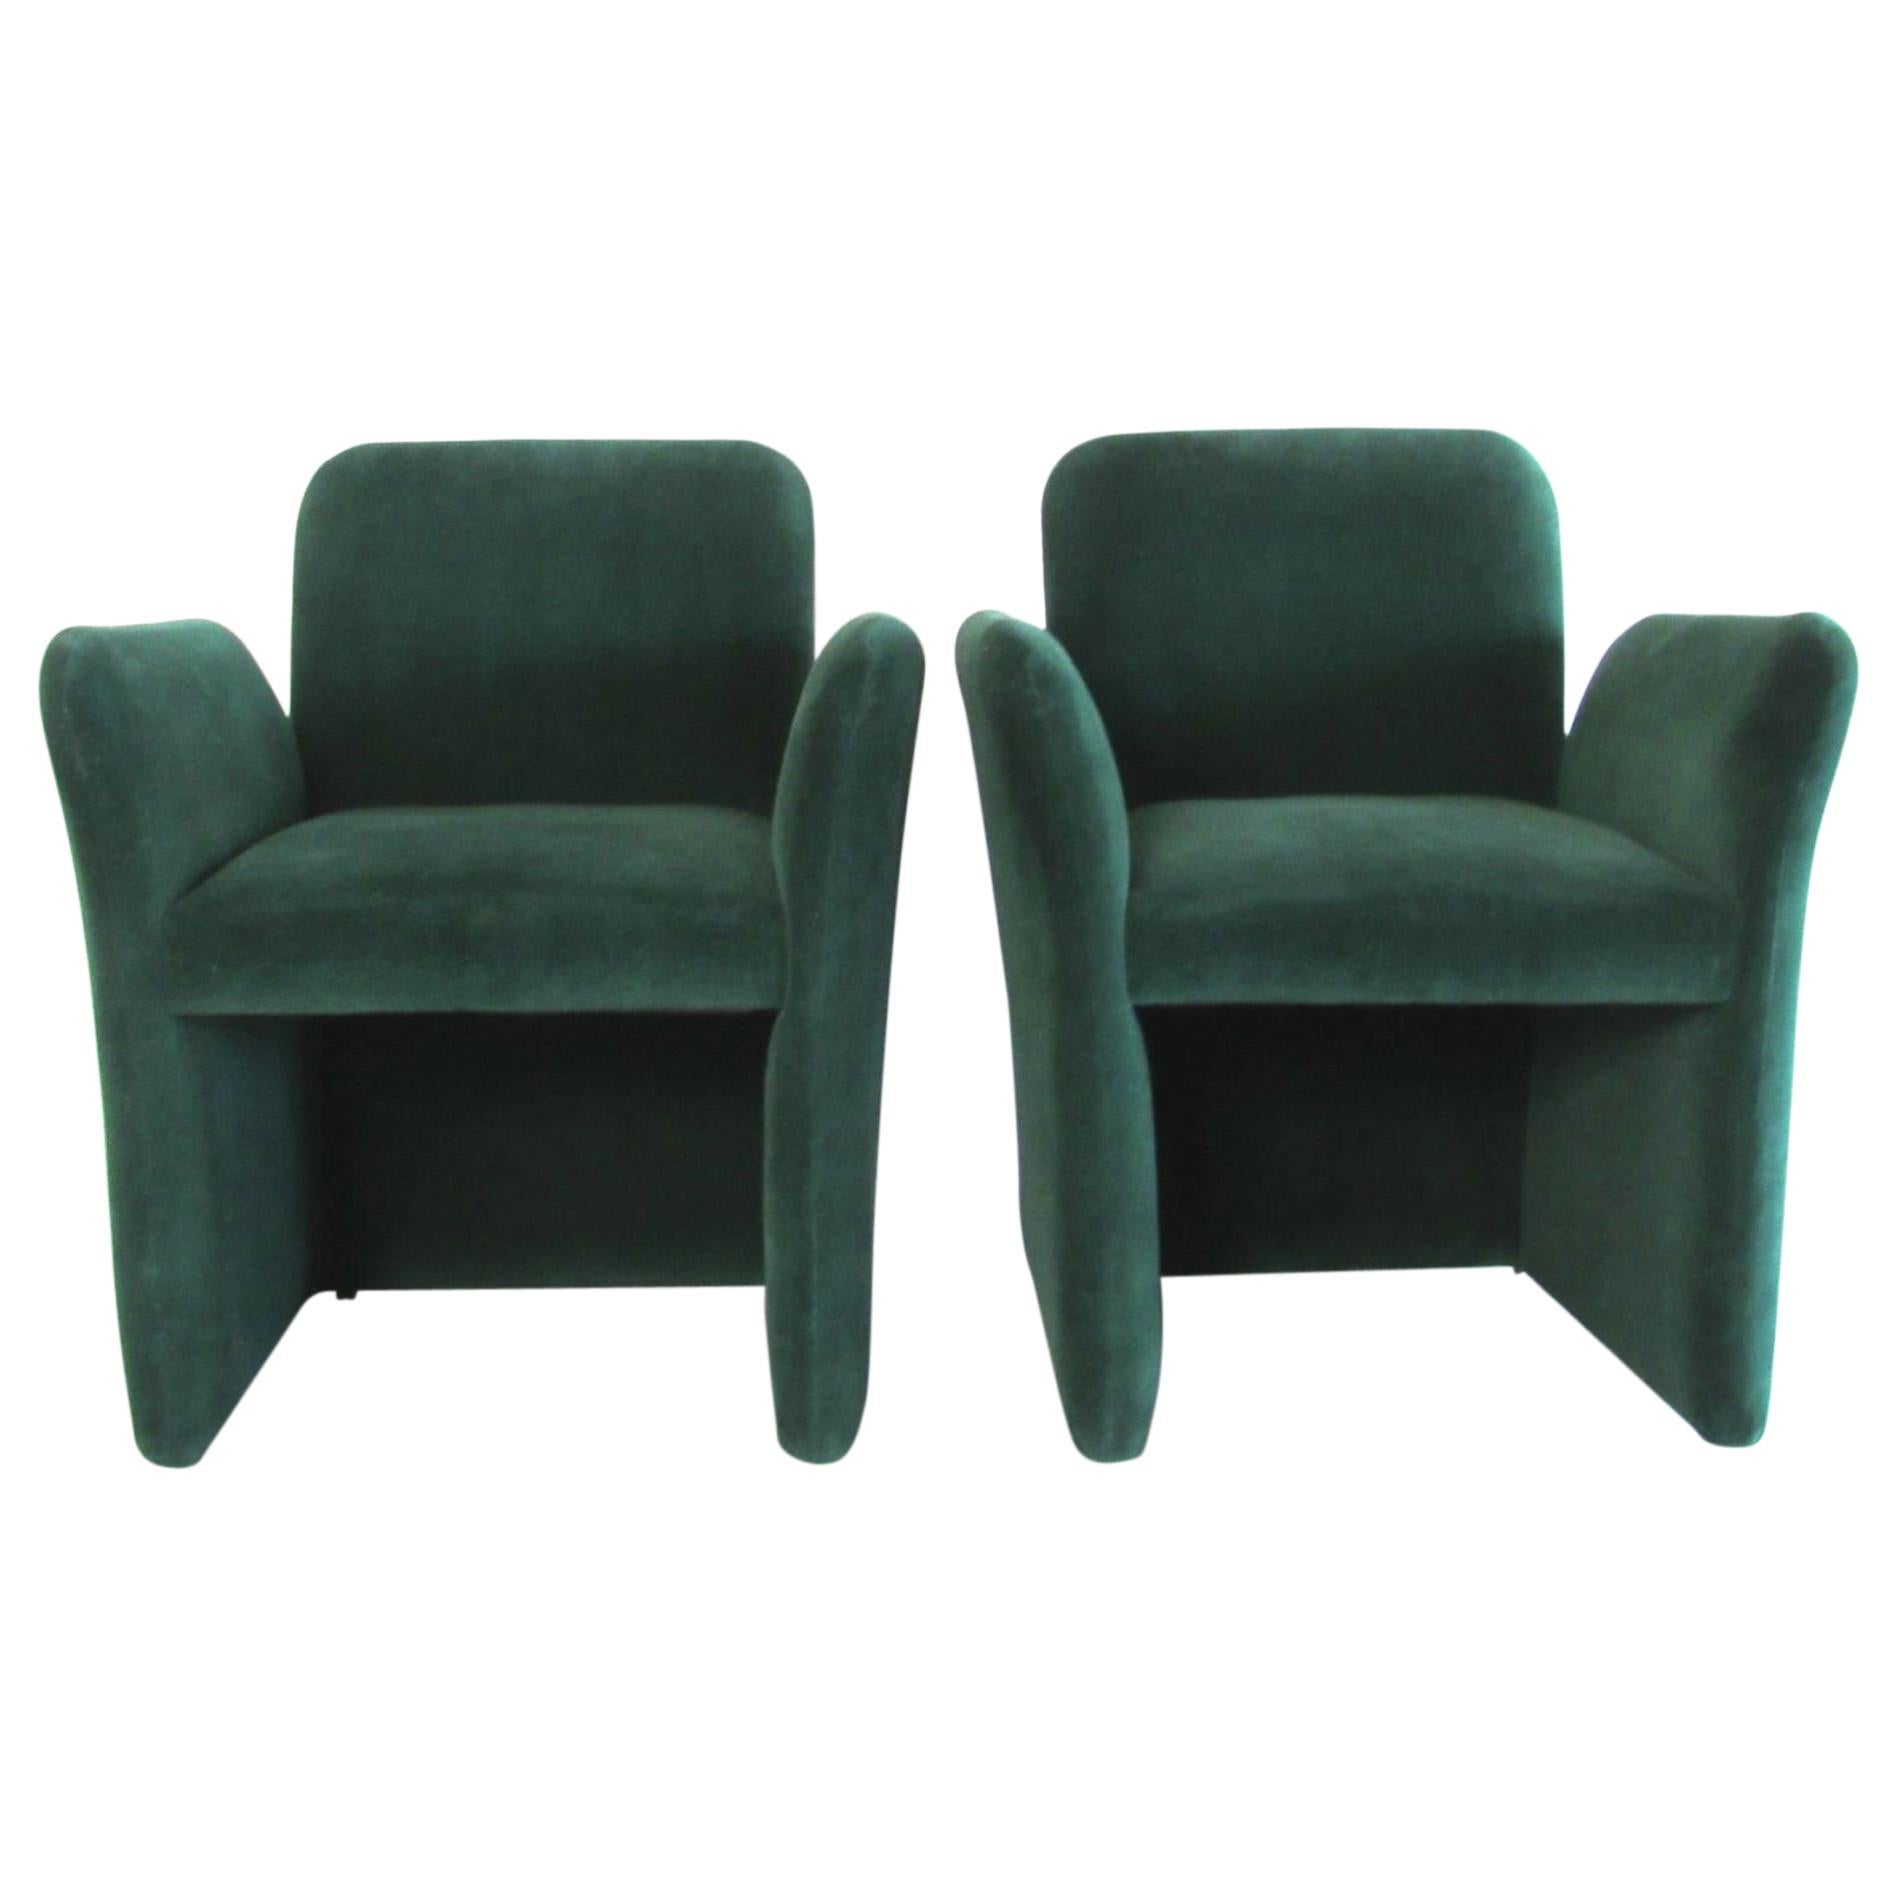 Pair of Emerald Green Velvet Upholstered Armchairs by Leon Rosen for Pace, 1980s